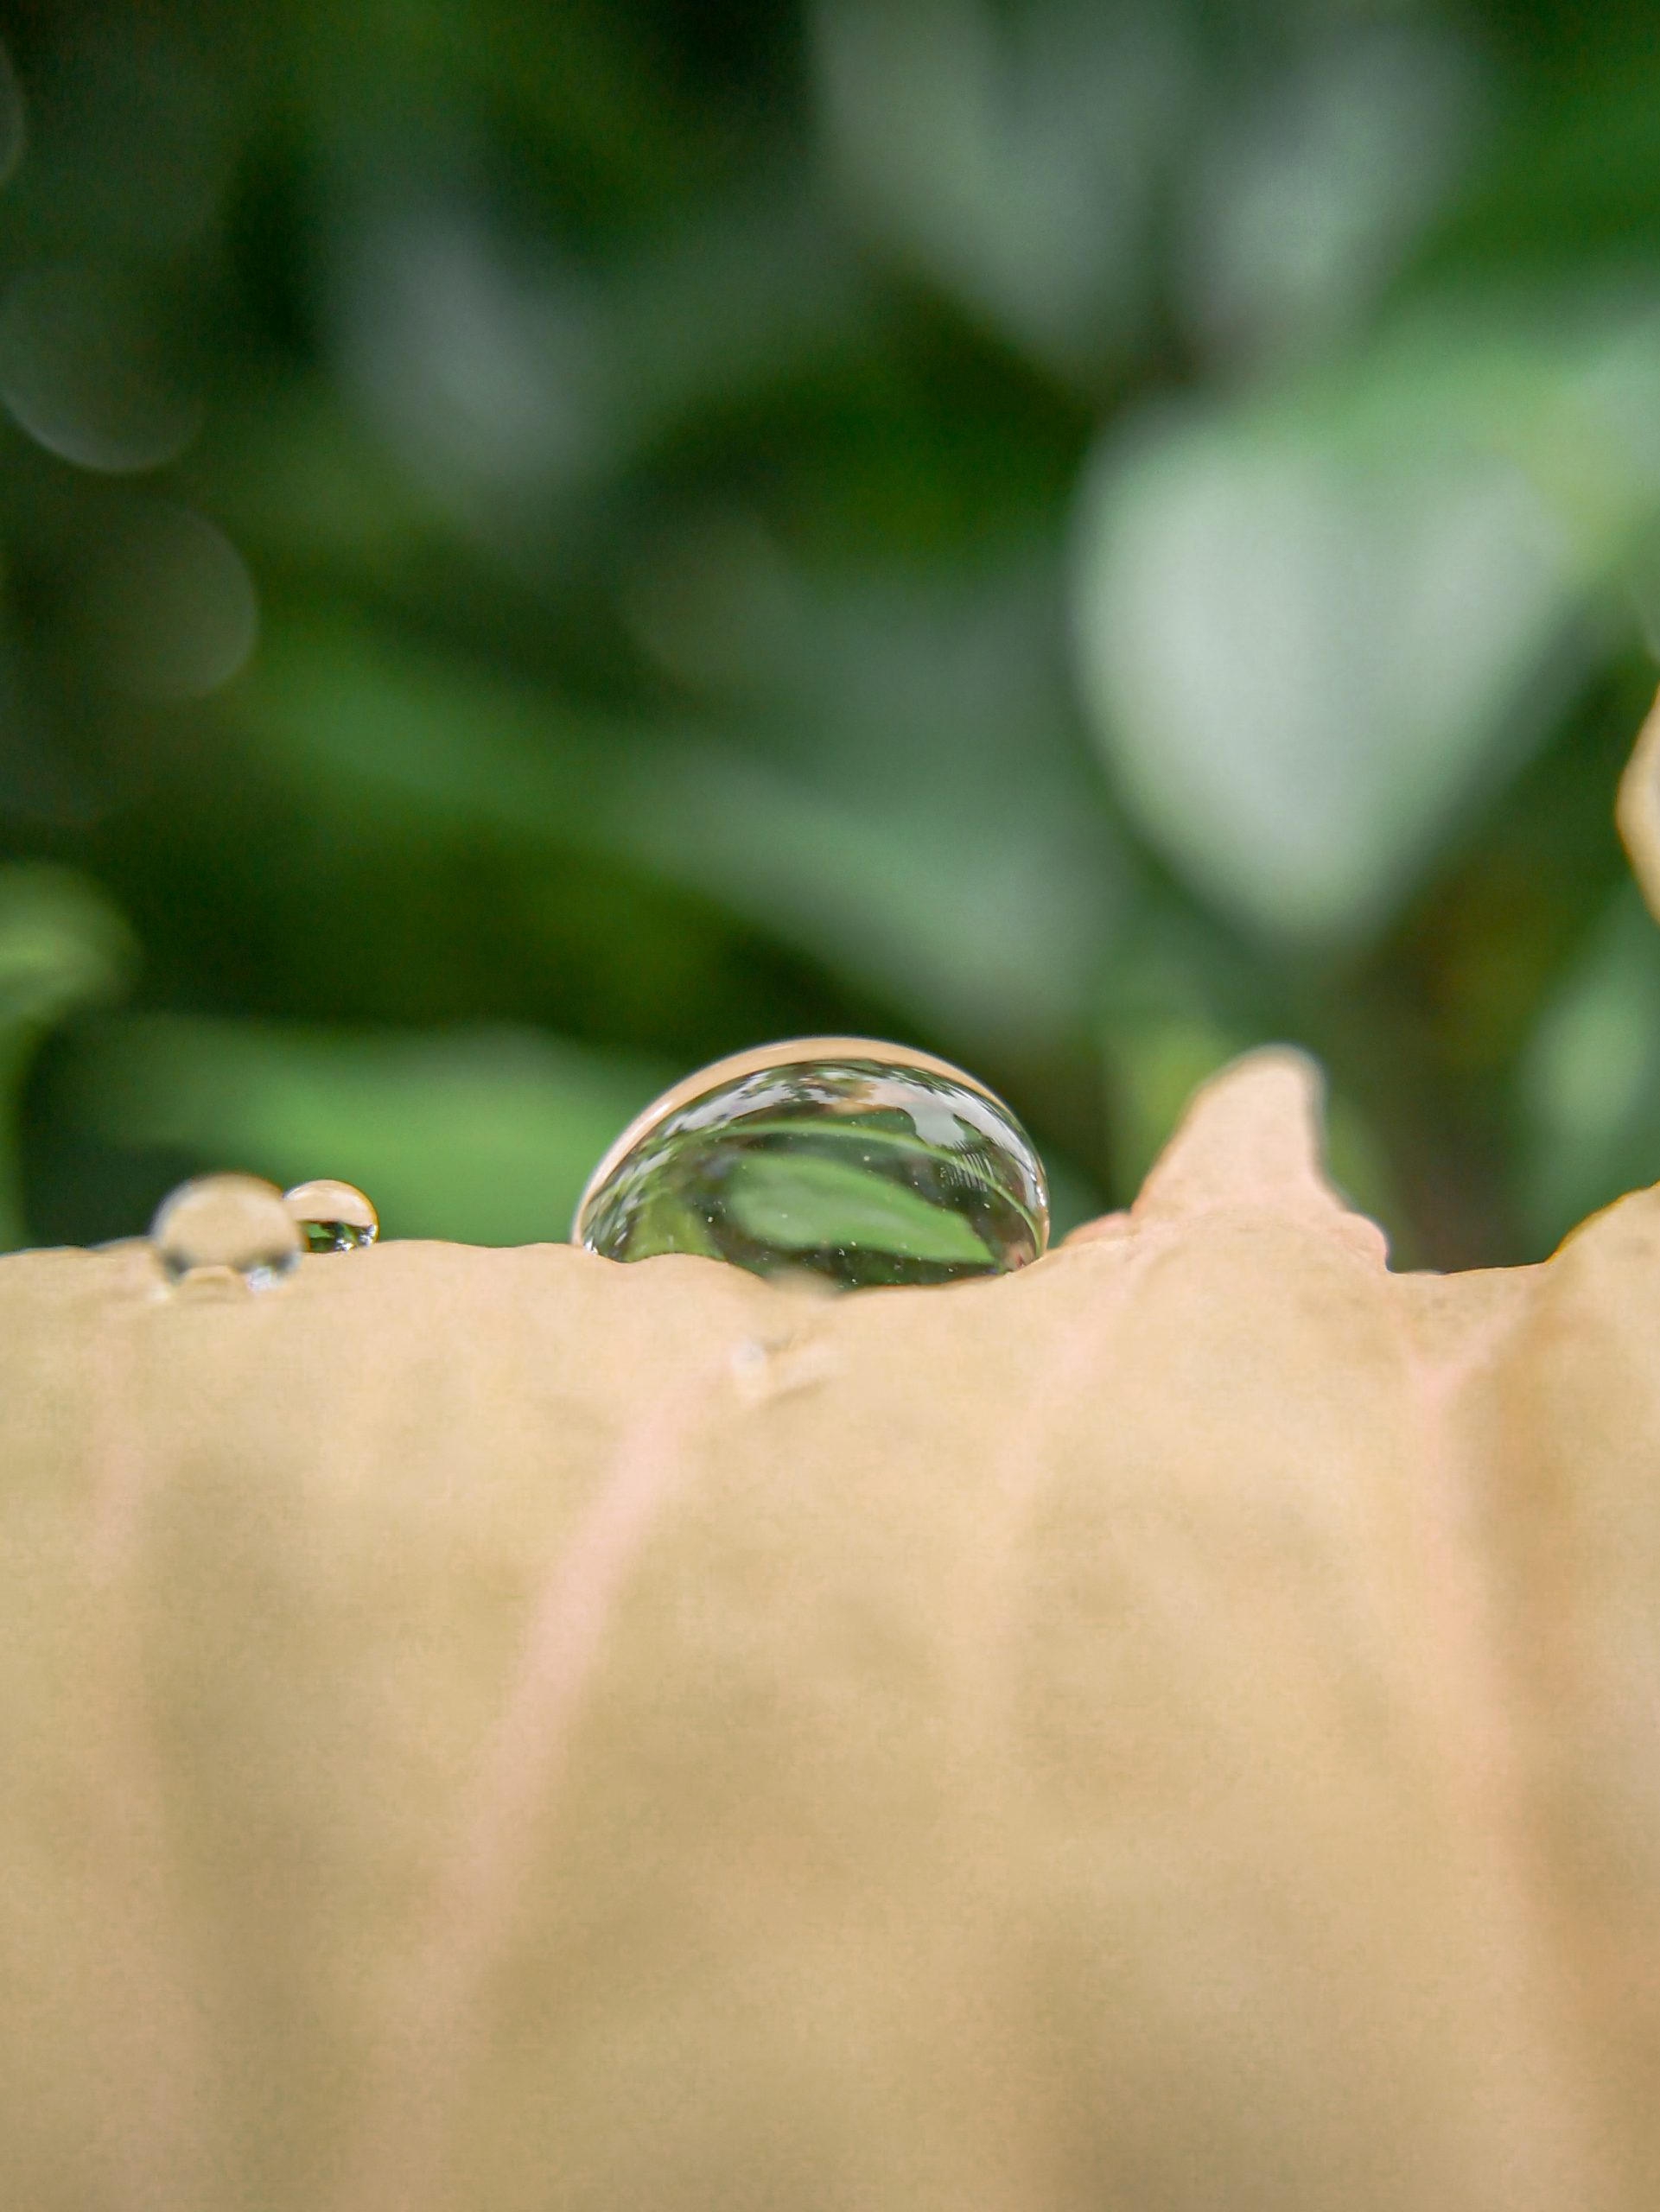 Water Drop on Leaf on Focus